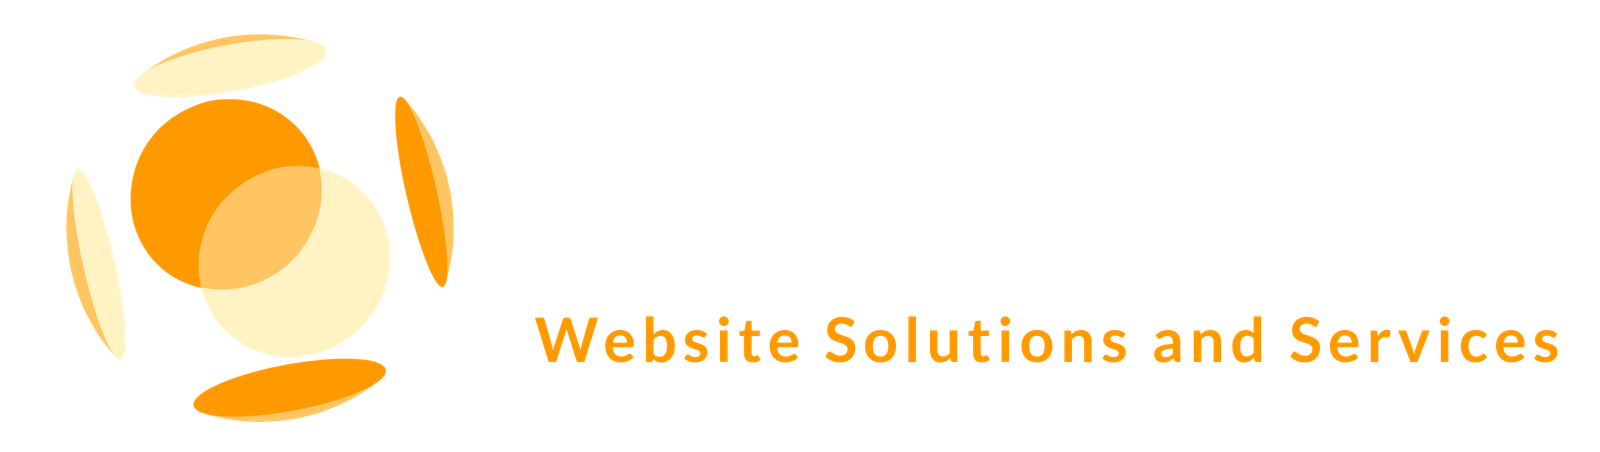 NeoWebb_Logo_3